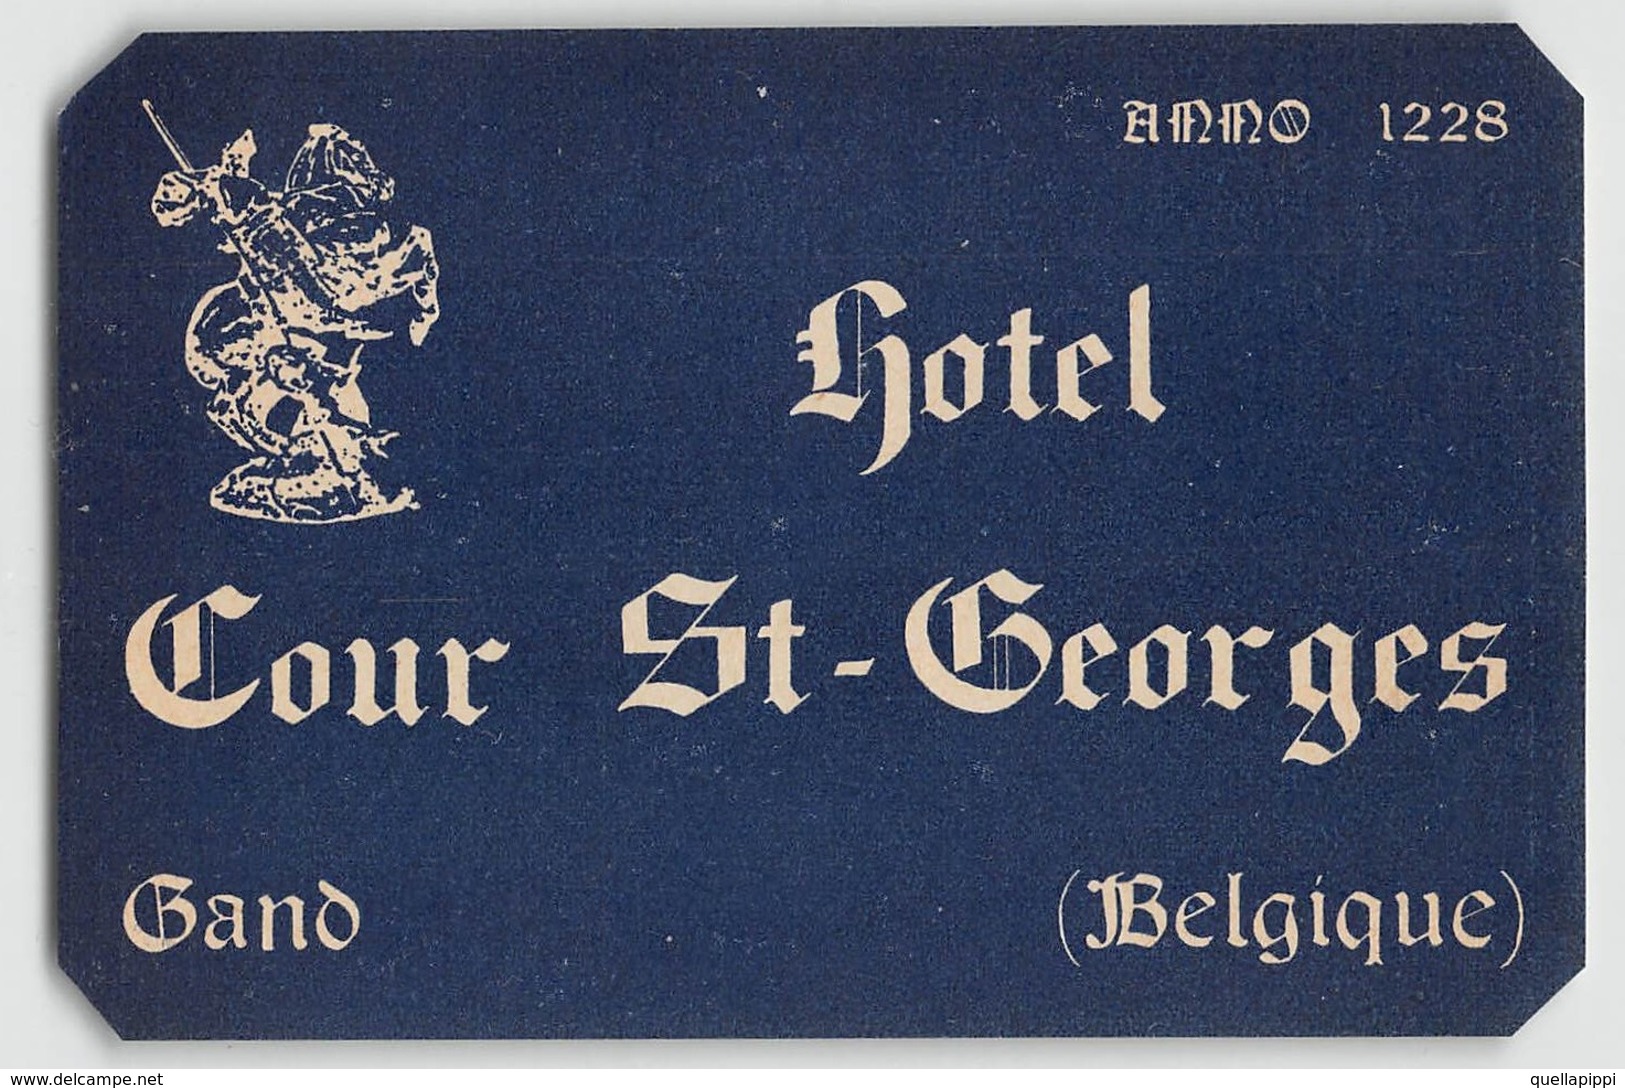 D5773 "HOTEL COUR ST. GEORGES - BAND - BELGIO " ETICHETTA ORIGINALE - ORIGINAL LABEL - ANNO 1228 - Adesivi Di Alberghi